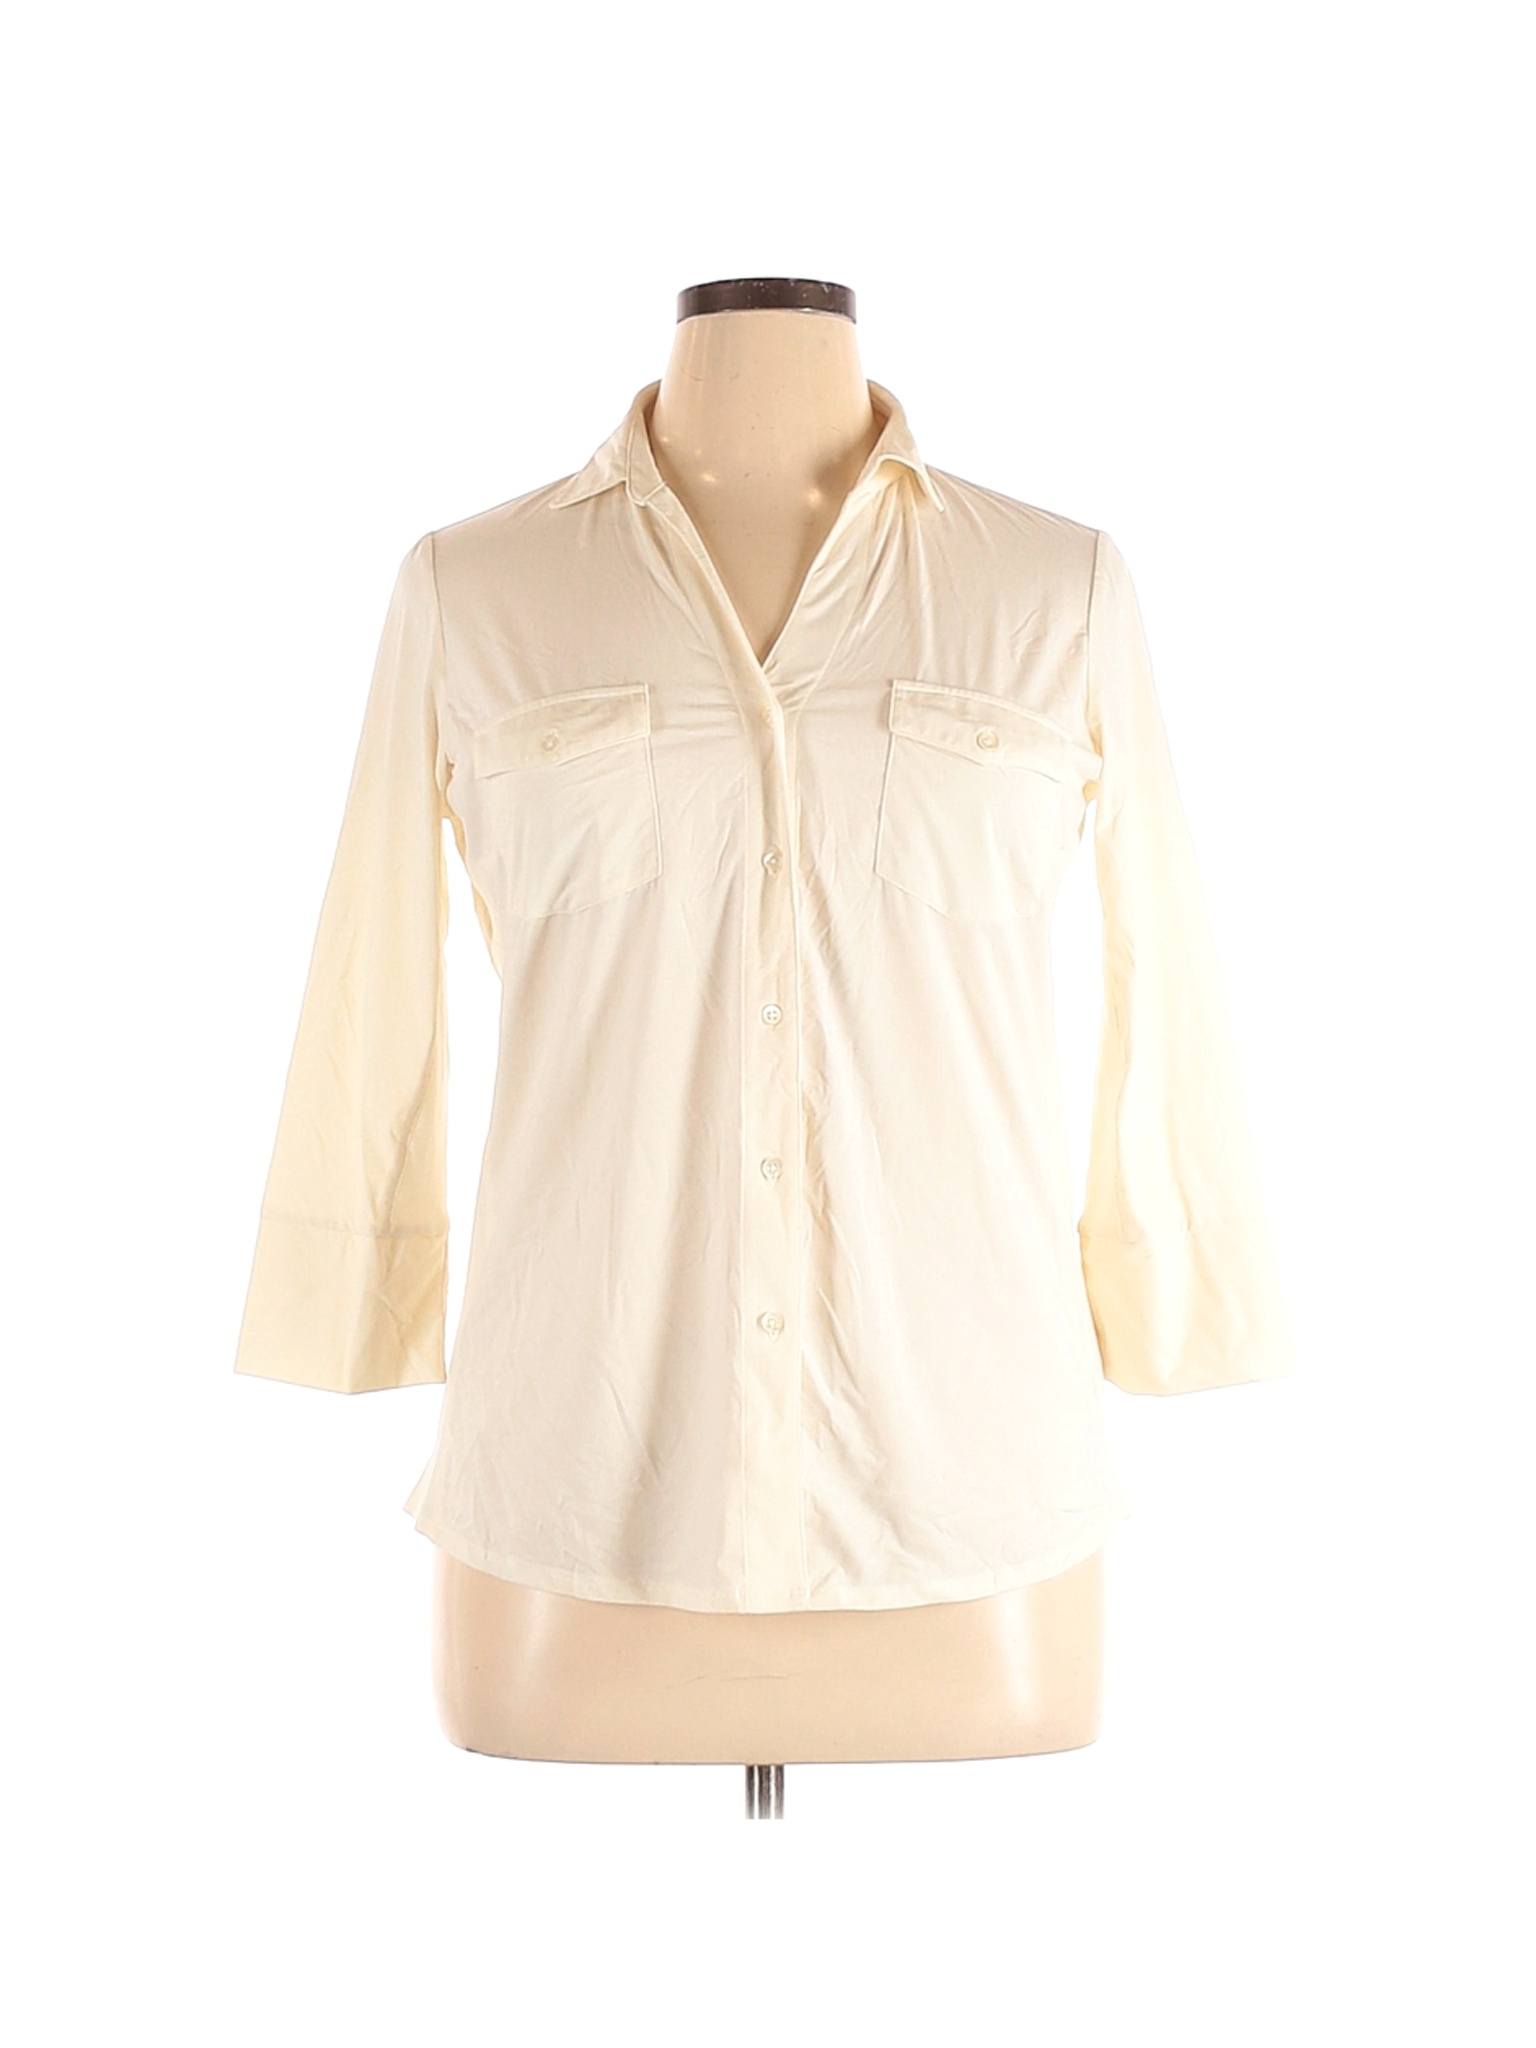 J. McLaughlin Women Ivory Long Sleeve Blouse XL | eBay